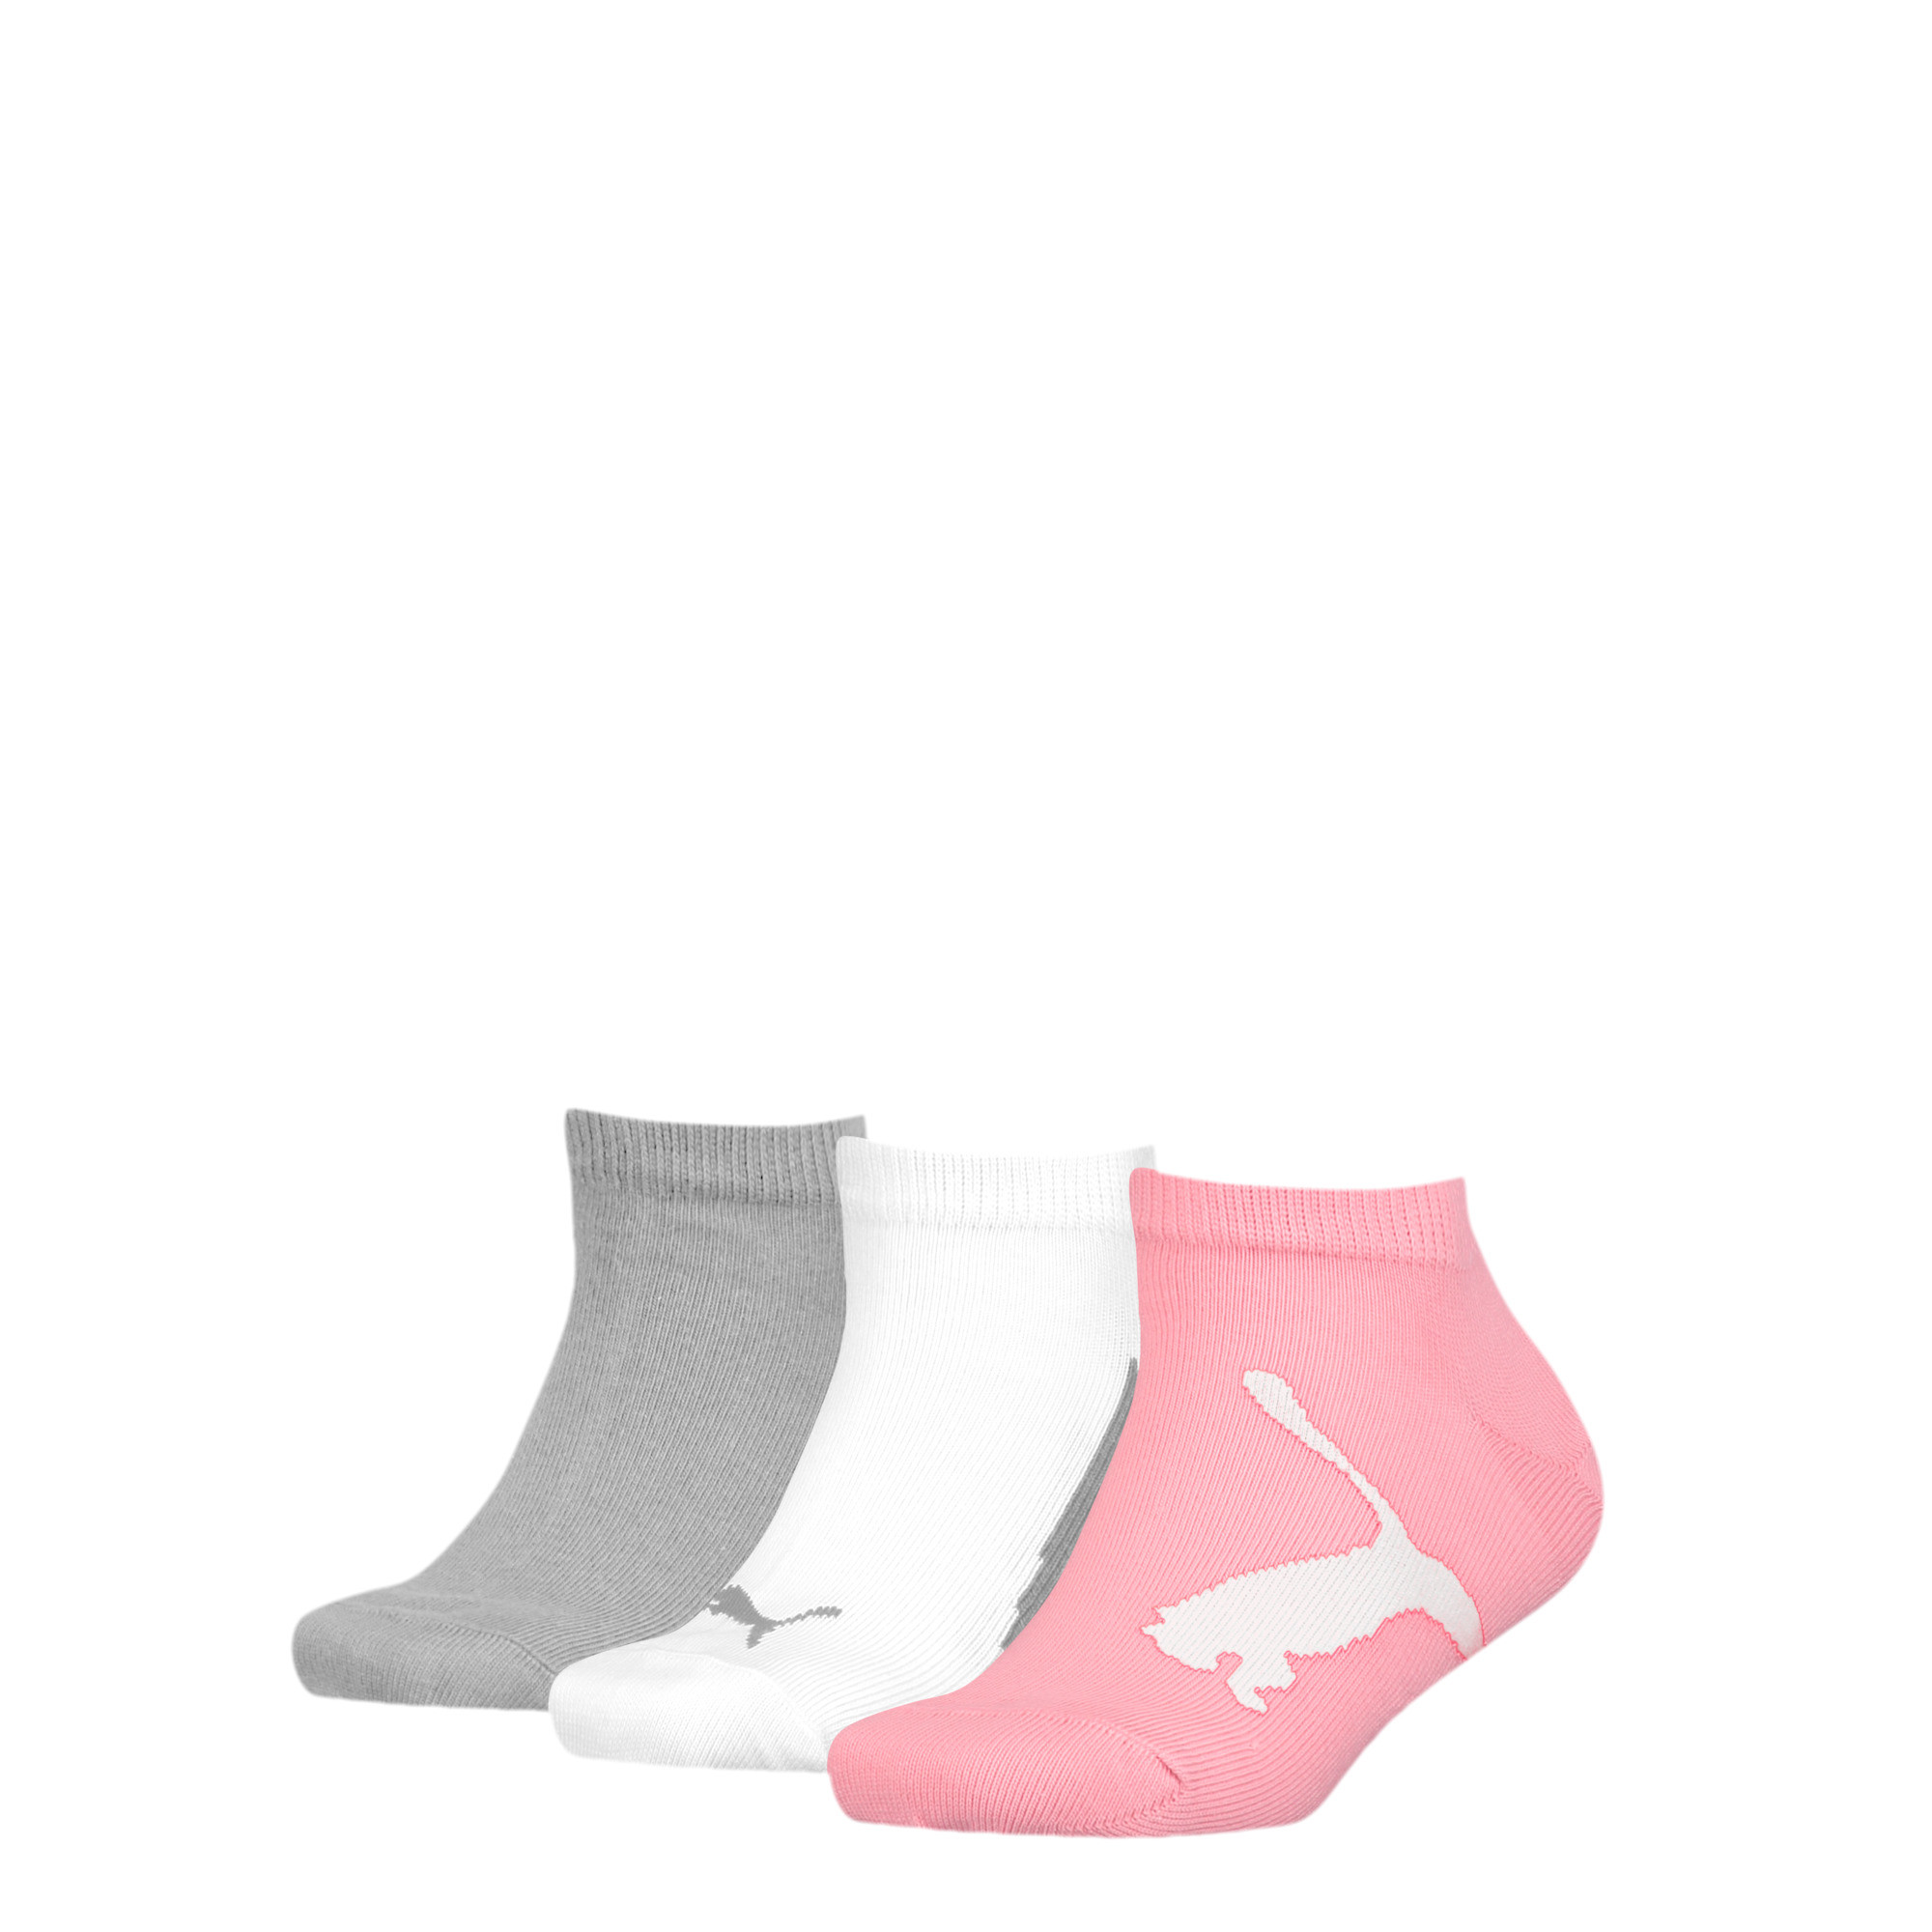 Kids' PUMA BWT Sneaker - Trainer Socks 3 Pack In Pink/Grey, Size 39-42